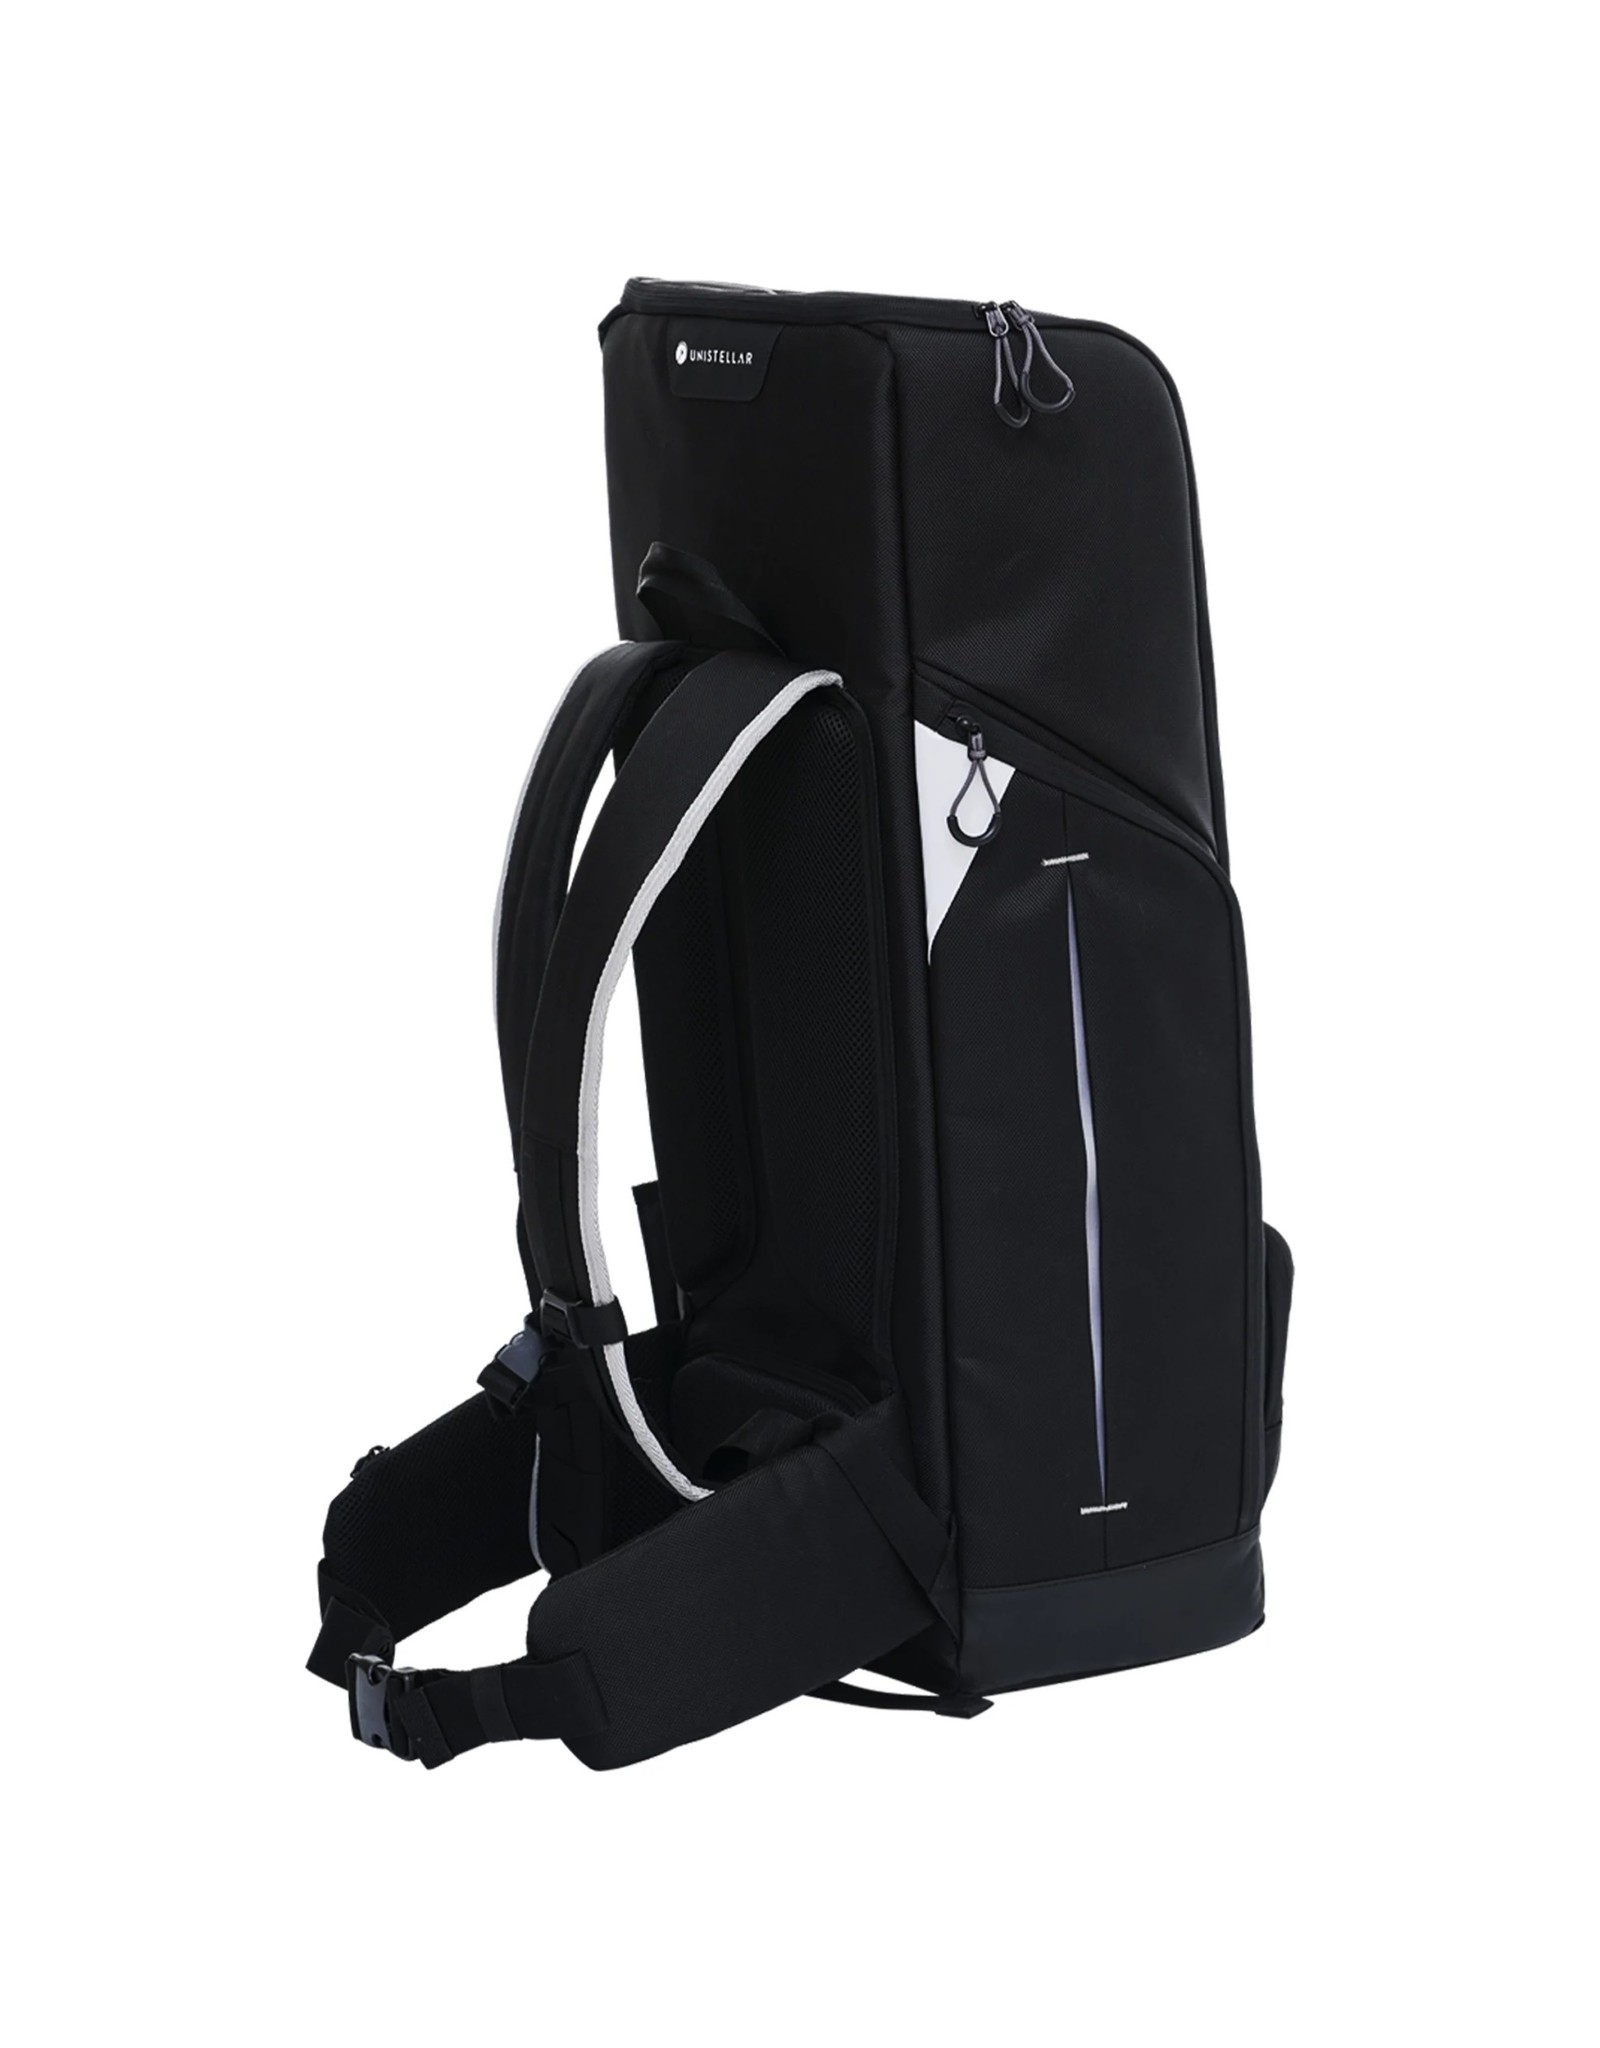 Unistellar Unistellar Backpack for eQuinox or eVscope 2